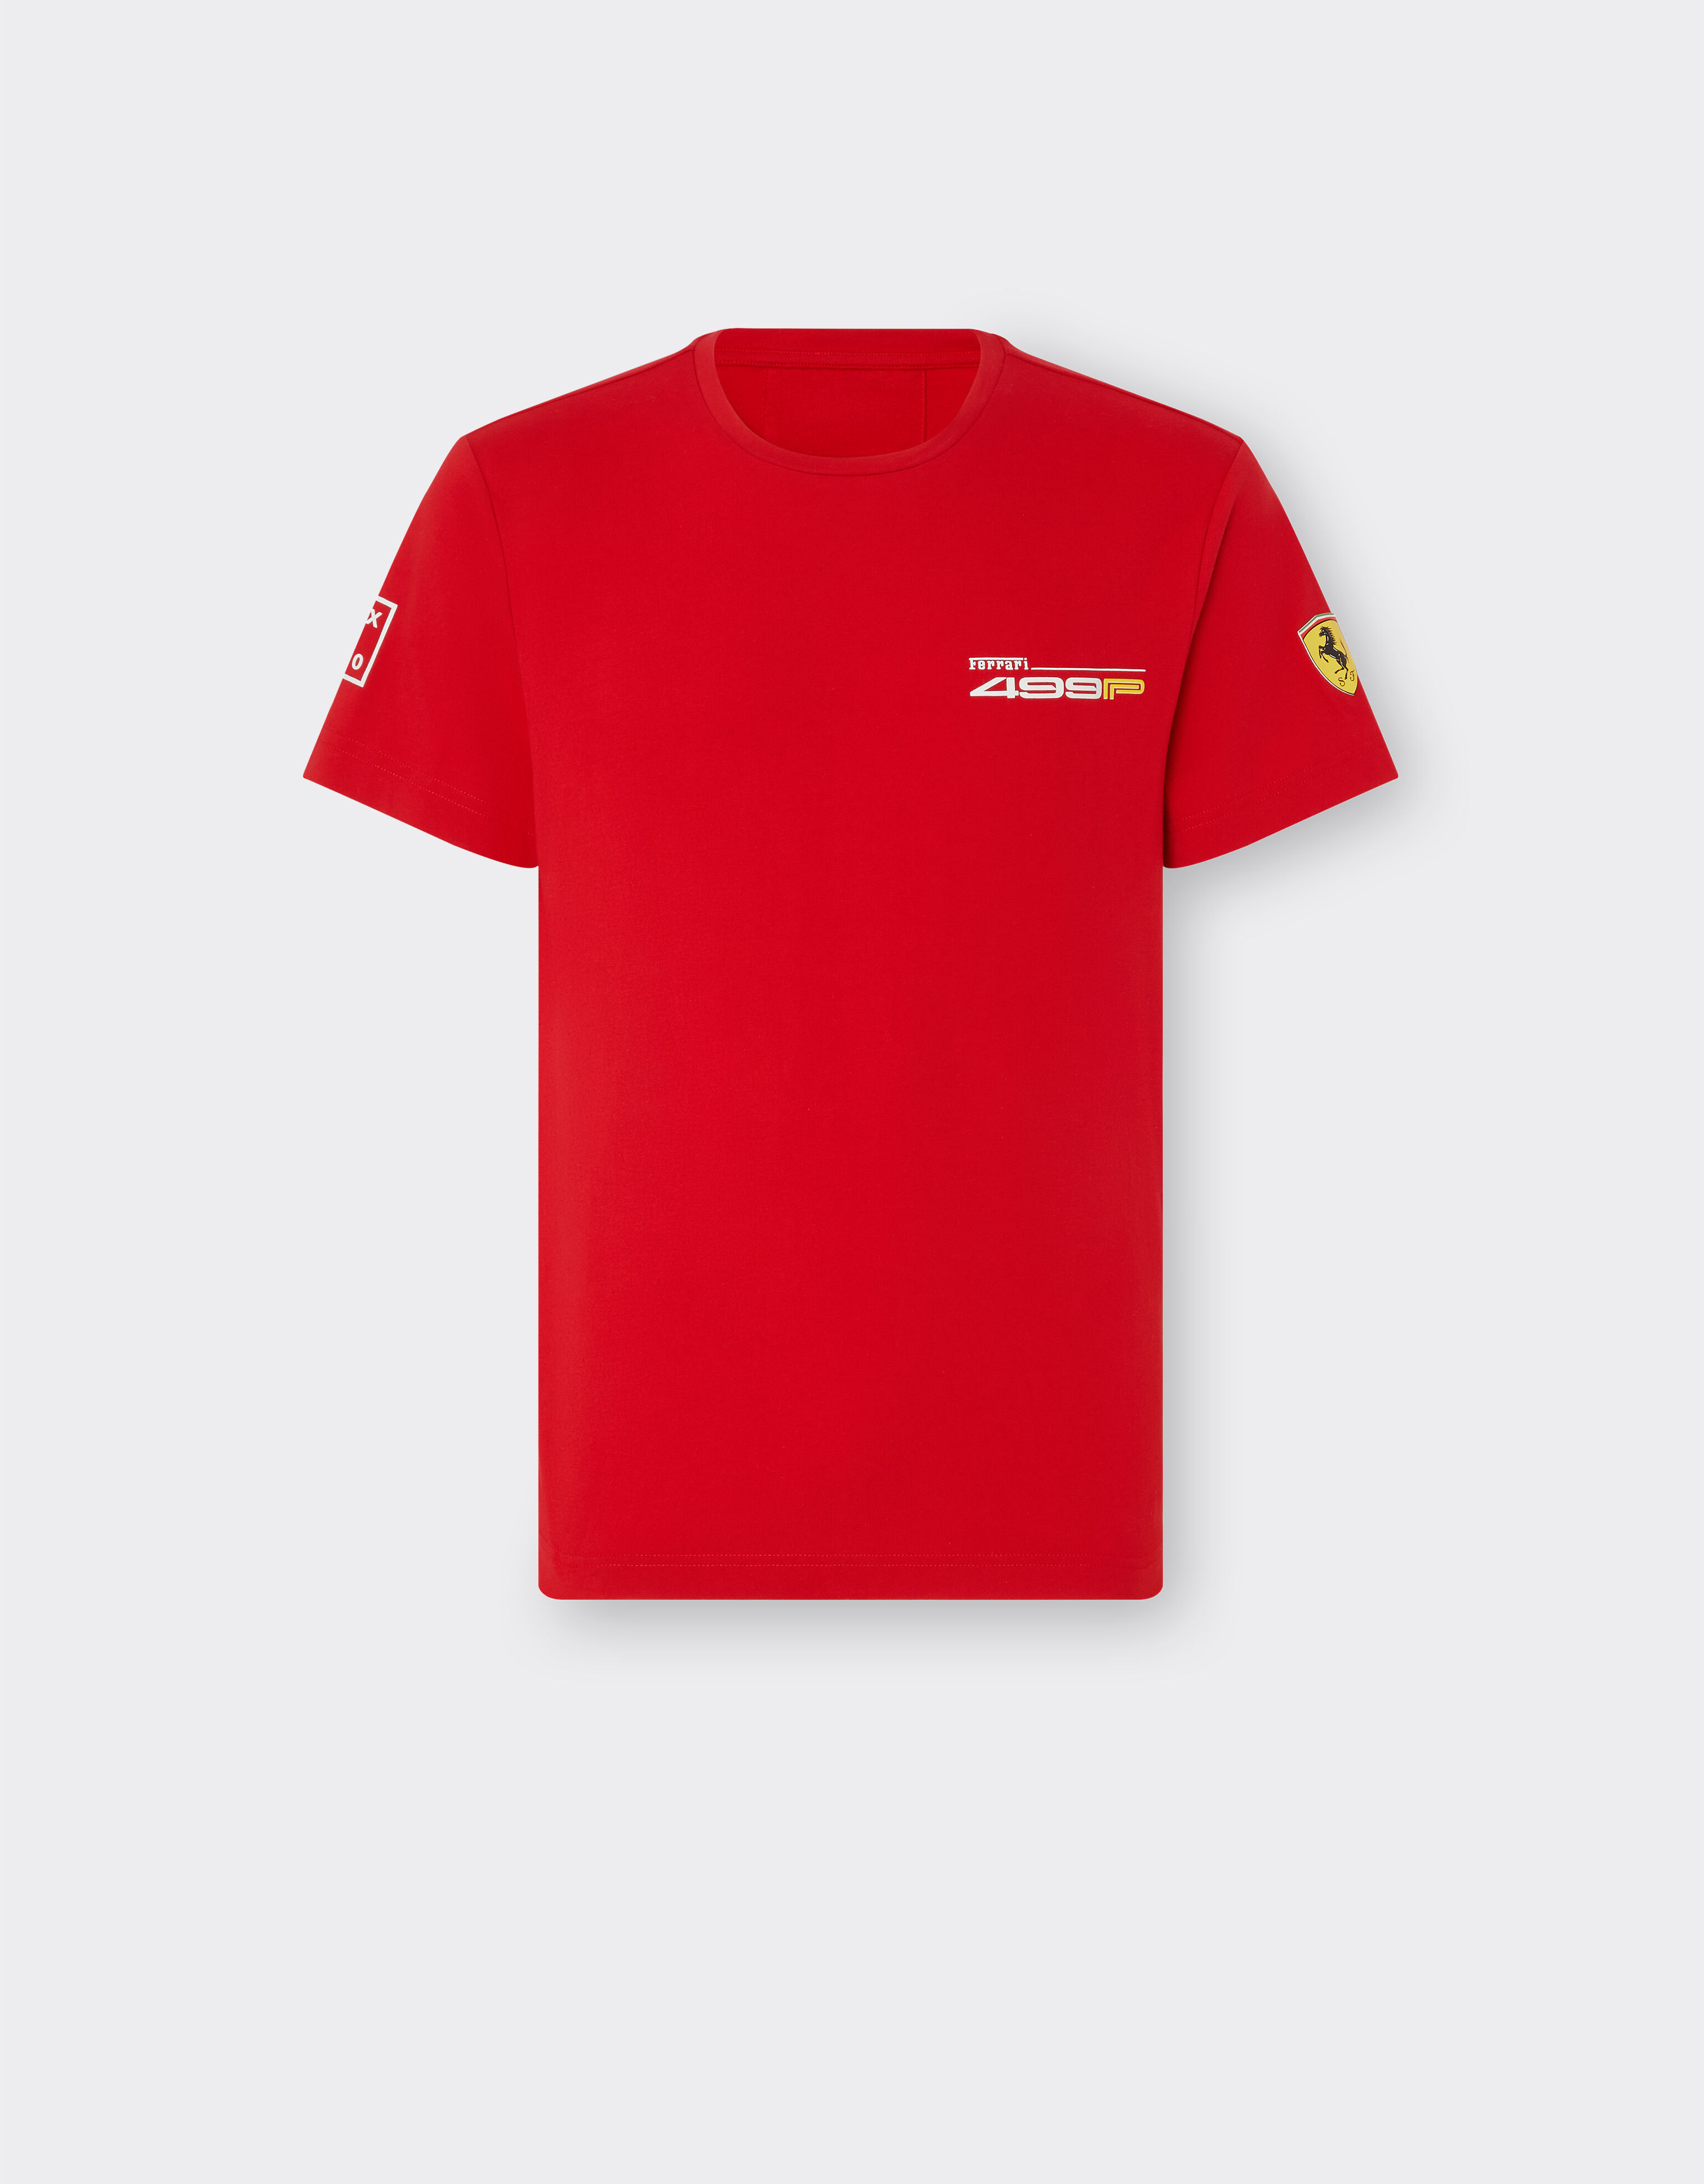 ${brand} Ferrari 499P Hypercar T-shirt ${colorDescription} ${masterID}